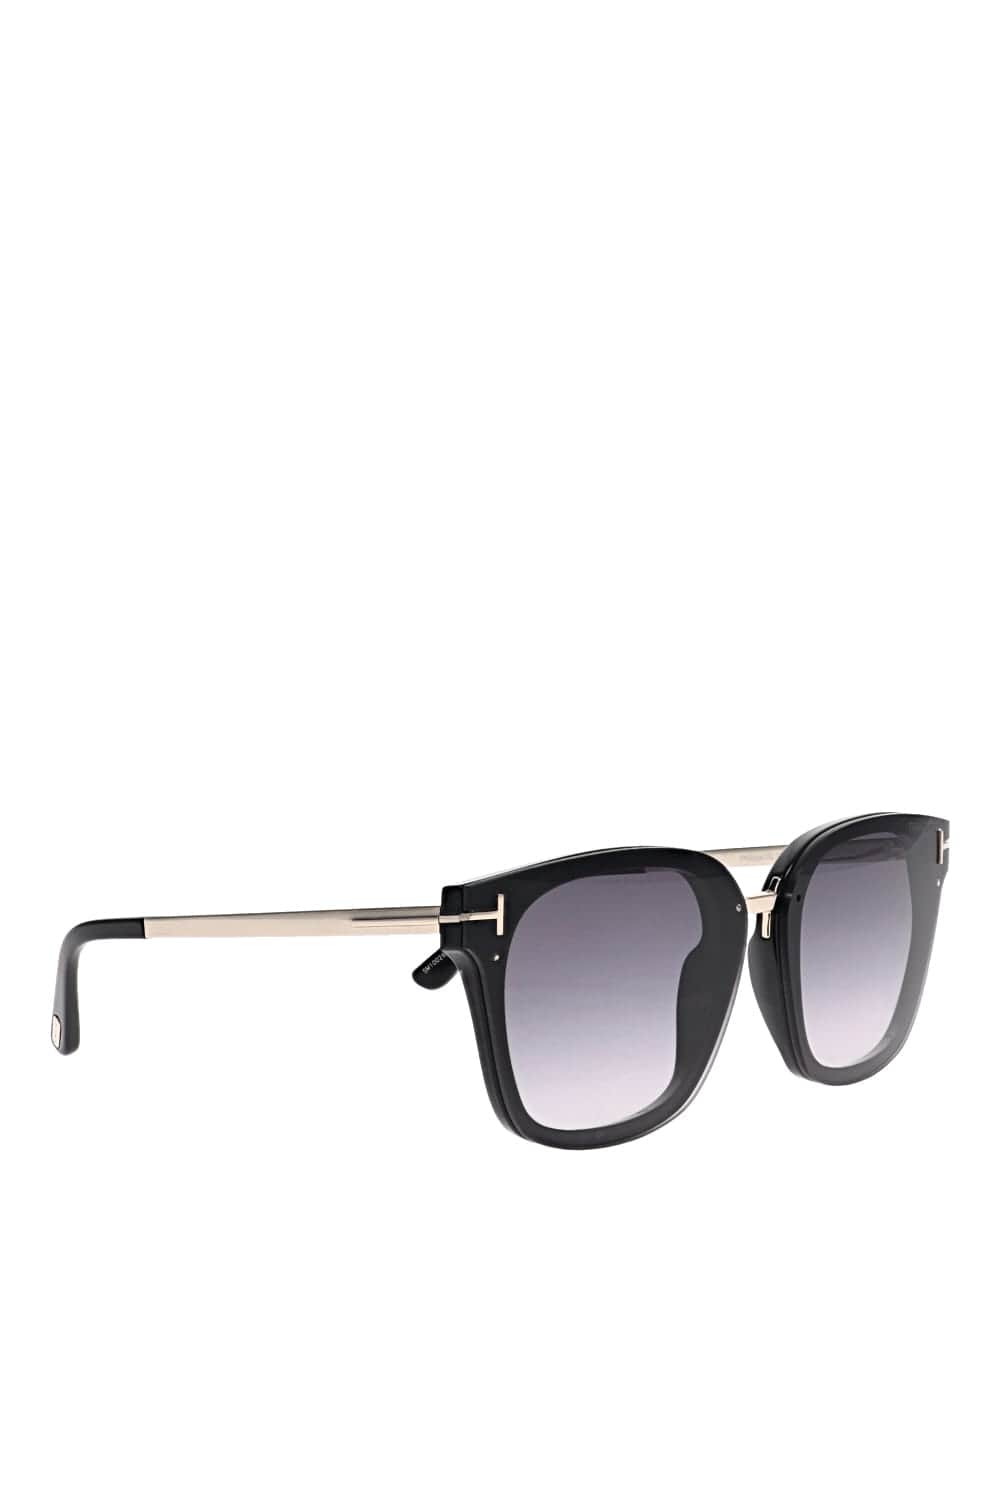 Tom Ford Eyewear FT1014 Shiny Black Sunglasses FT1014 Black/Smoke